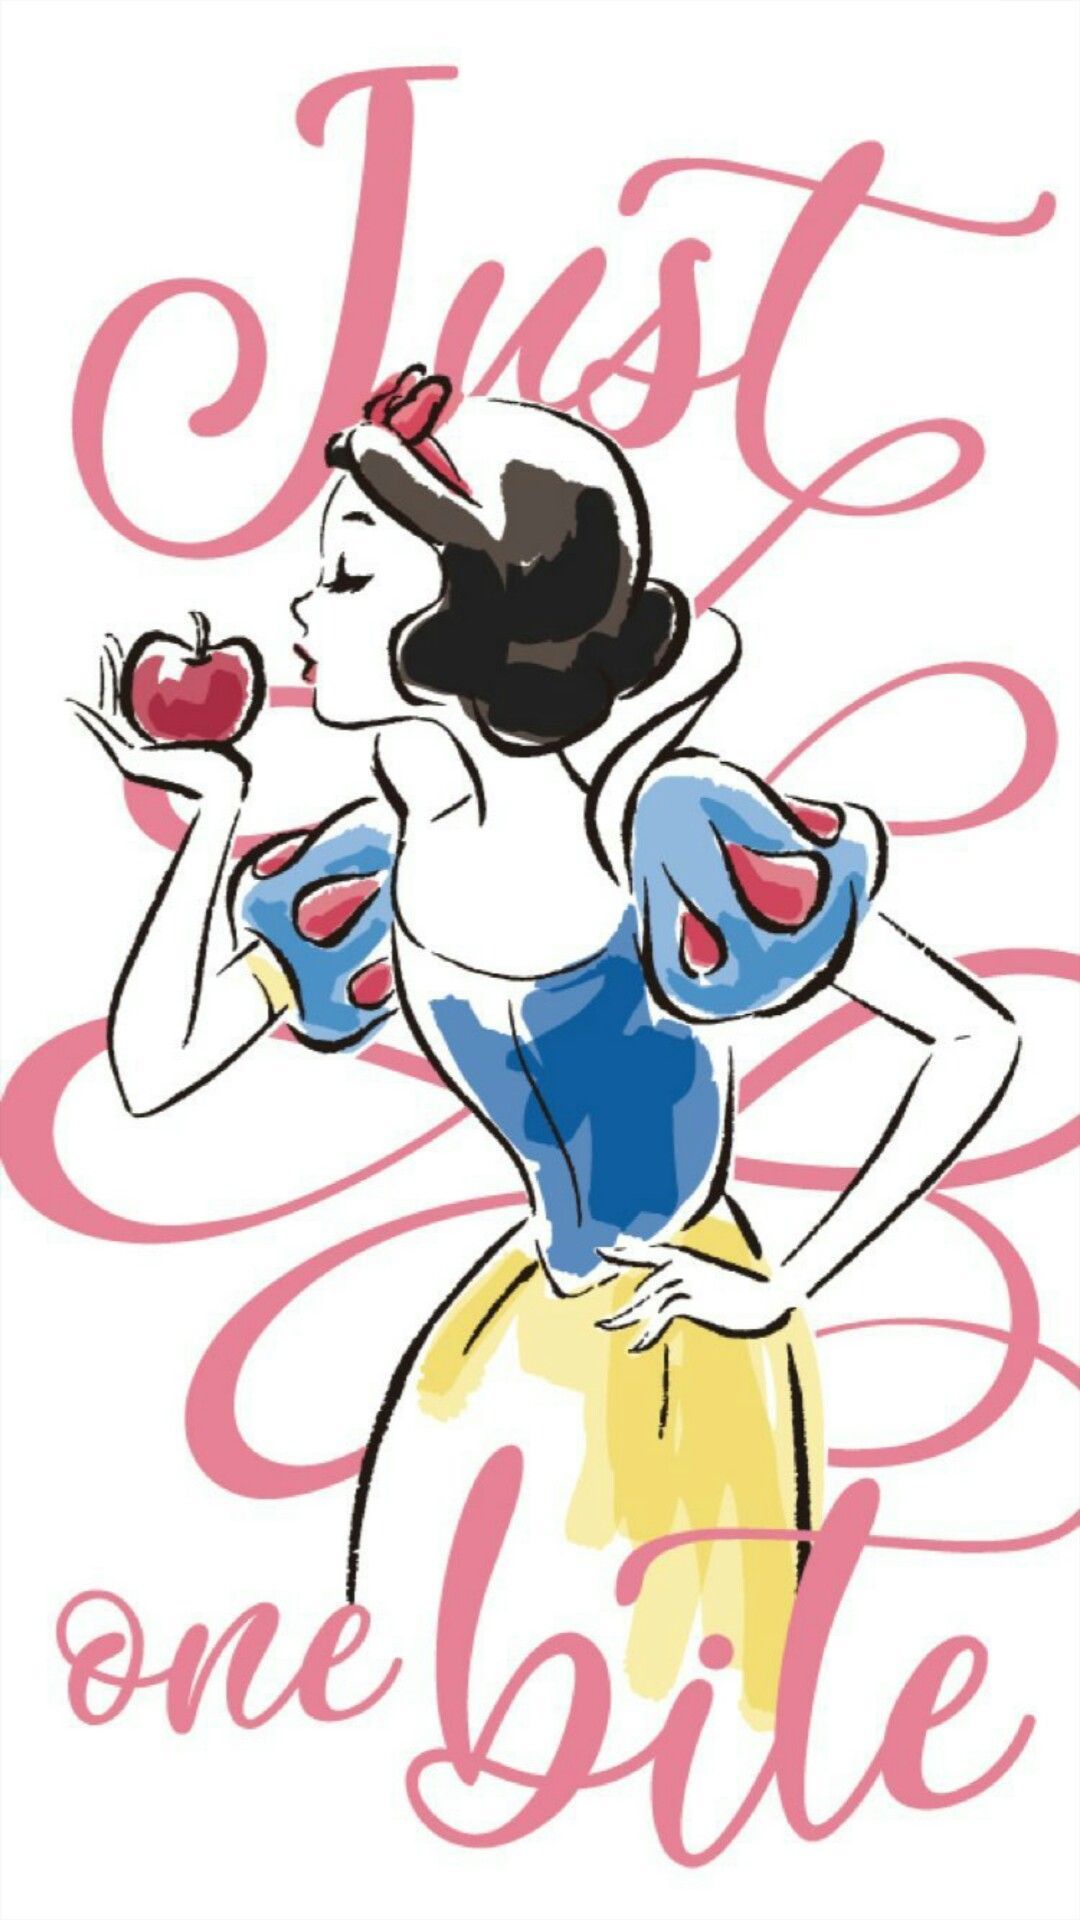 46+] Snow White HD Wallpaper - WallpaperSafari